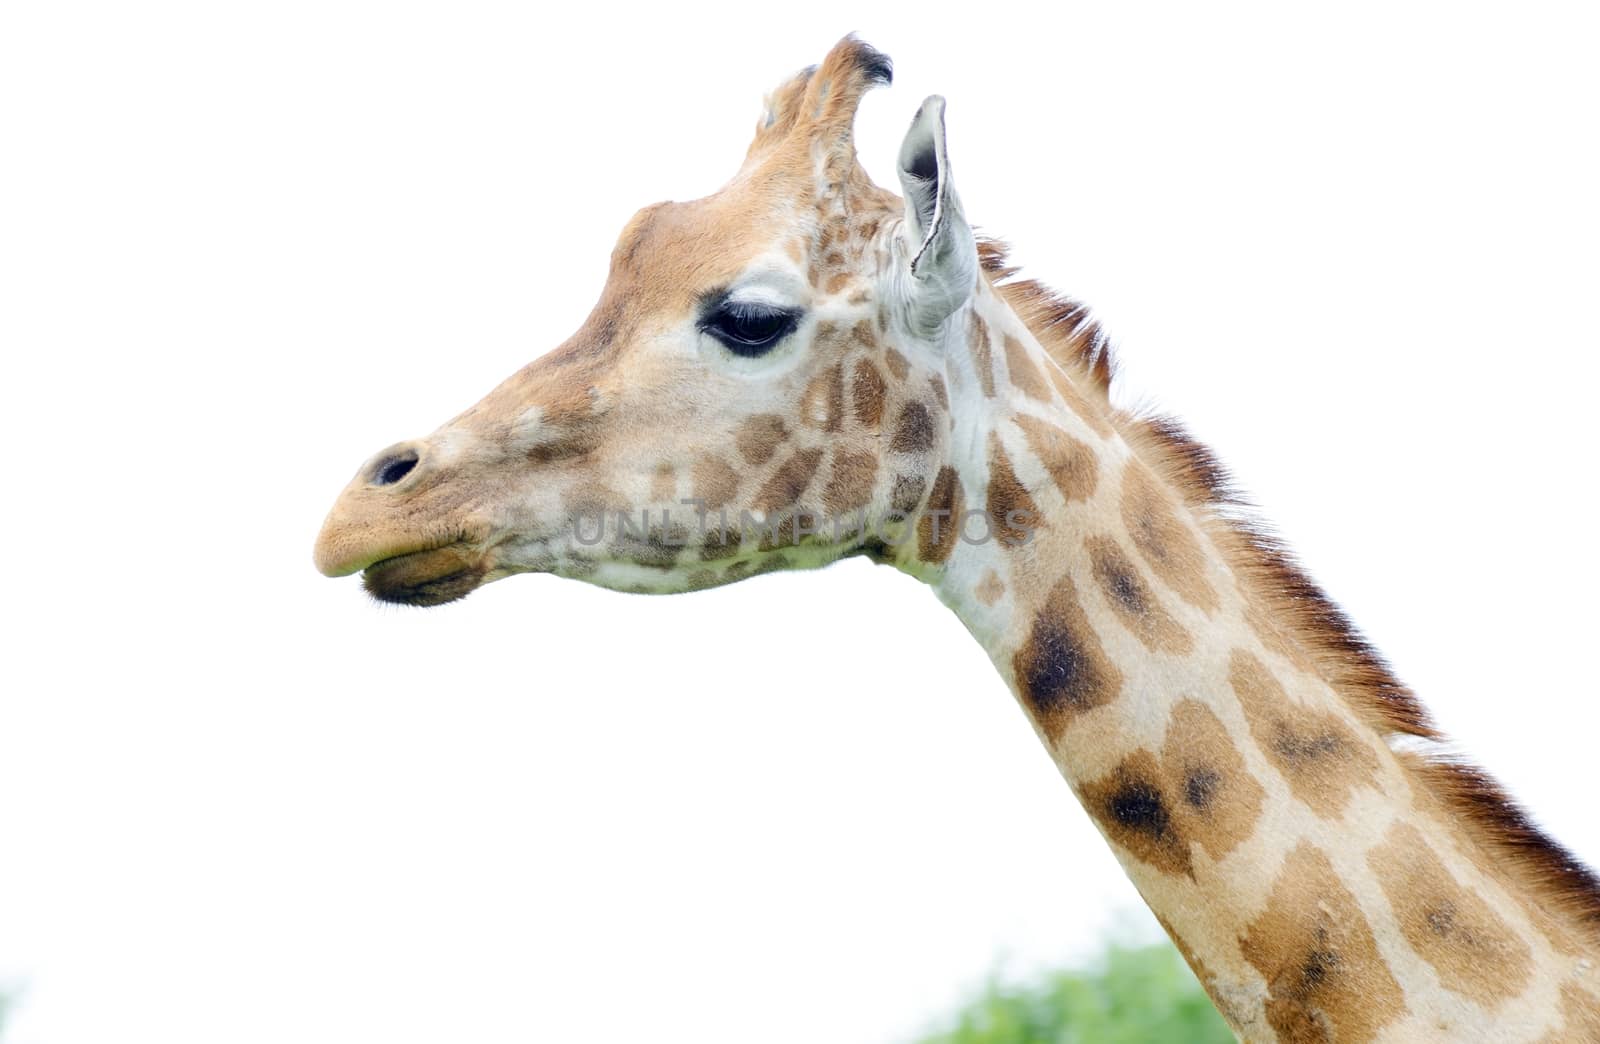 Giraffe by kmwphotography